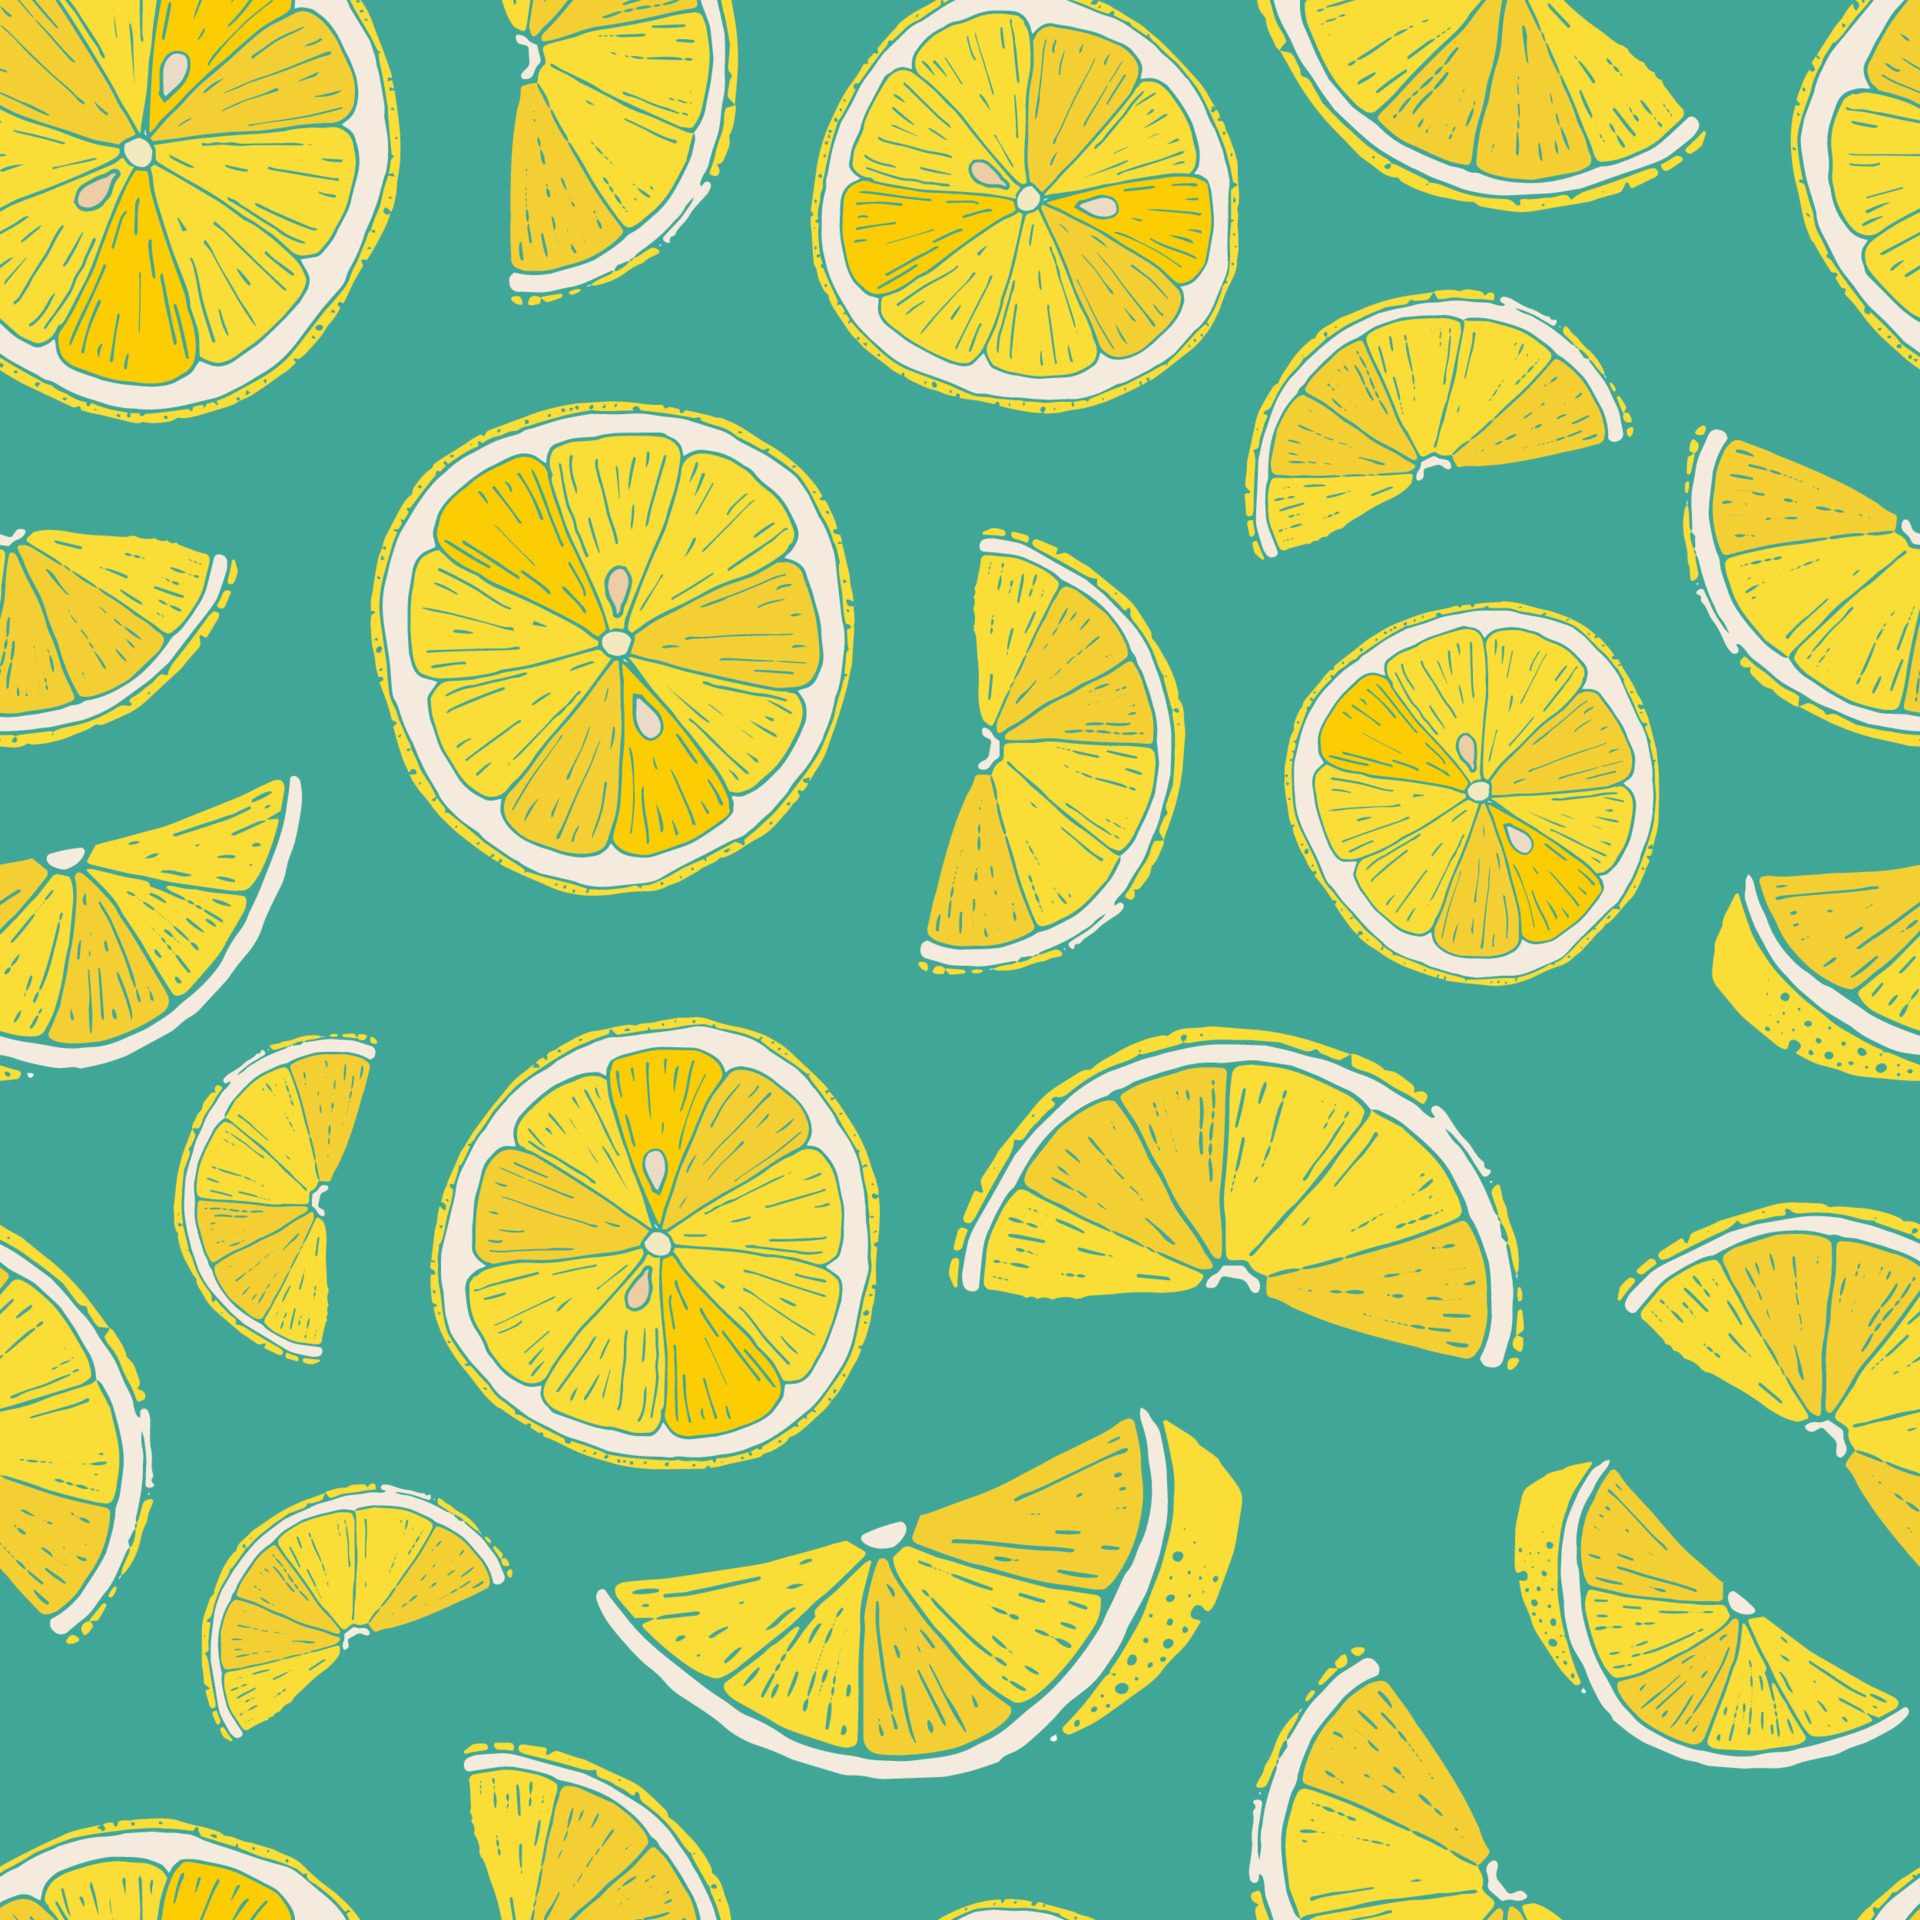 Tải xuống APK Lemon Live Wallpaper cho Android